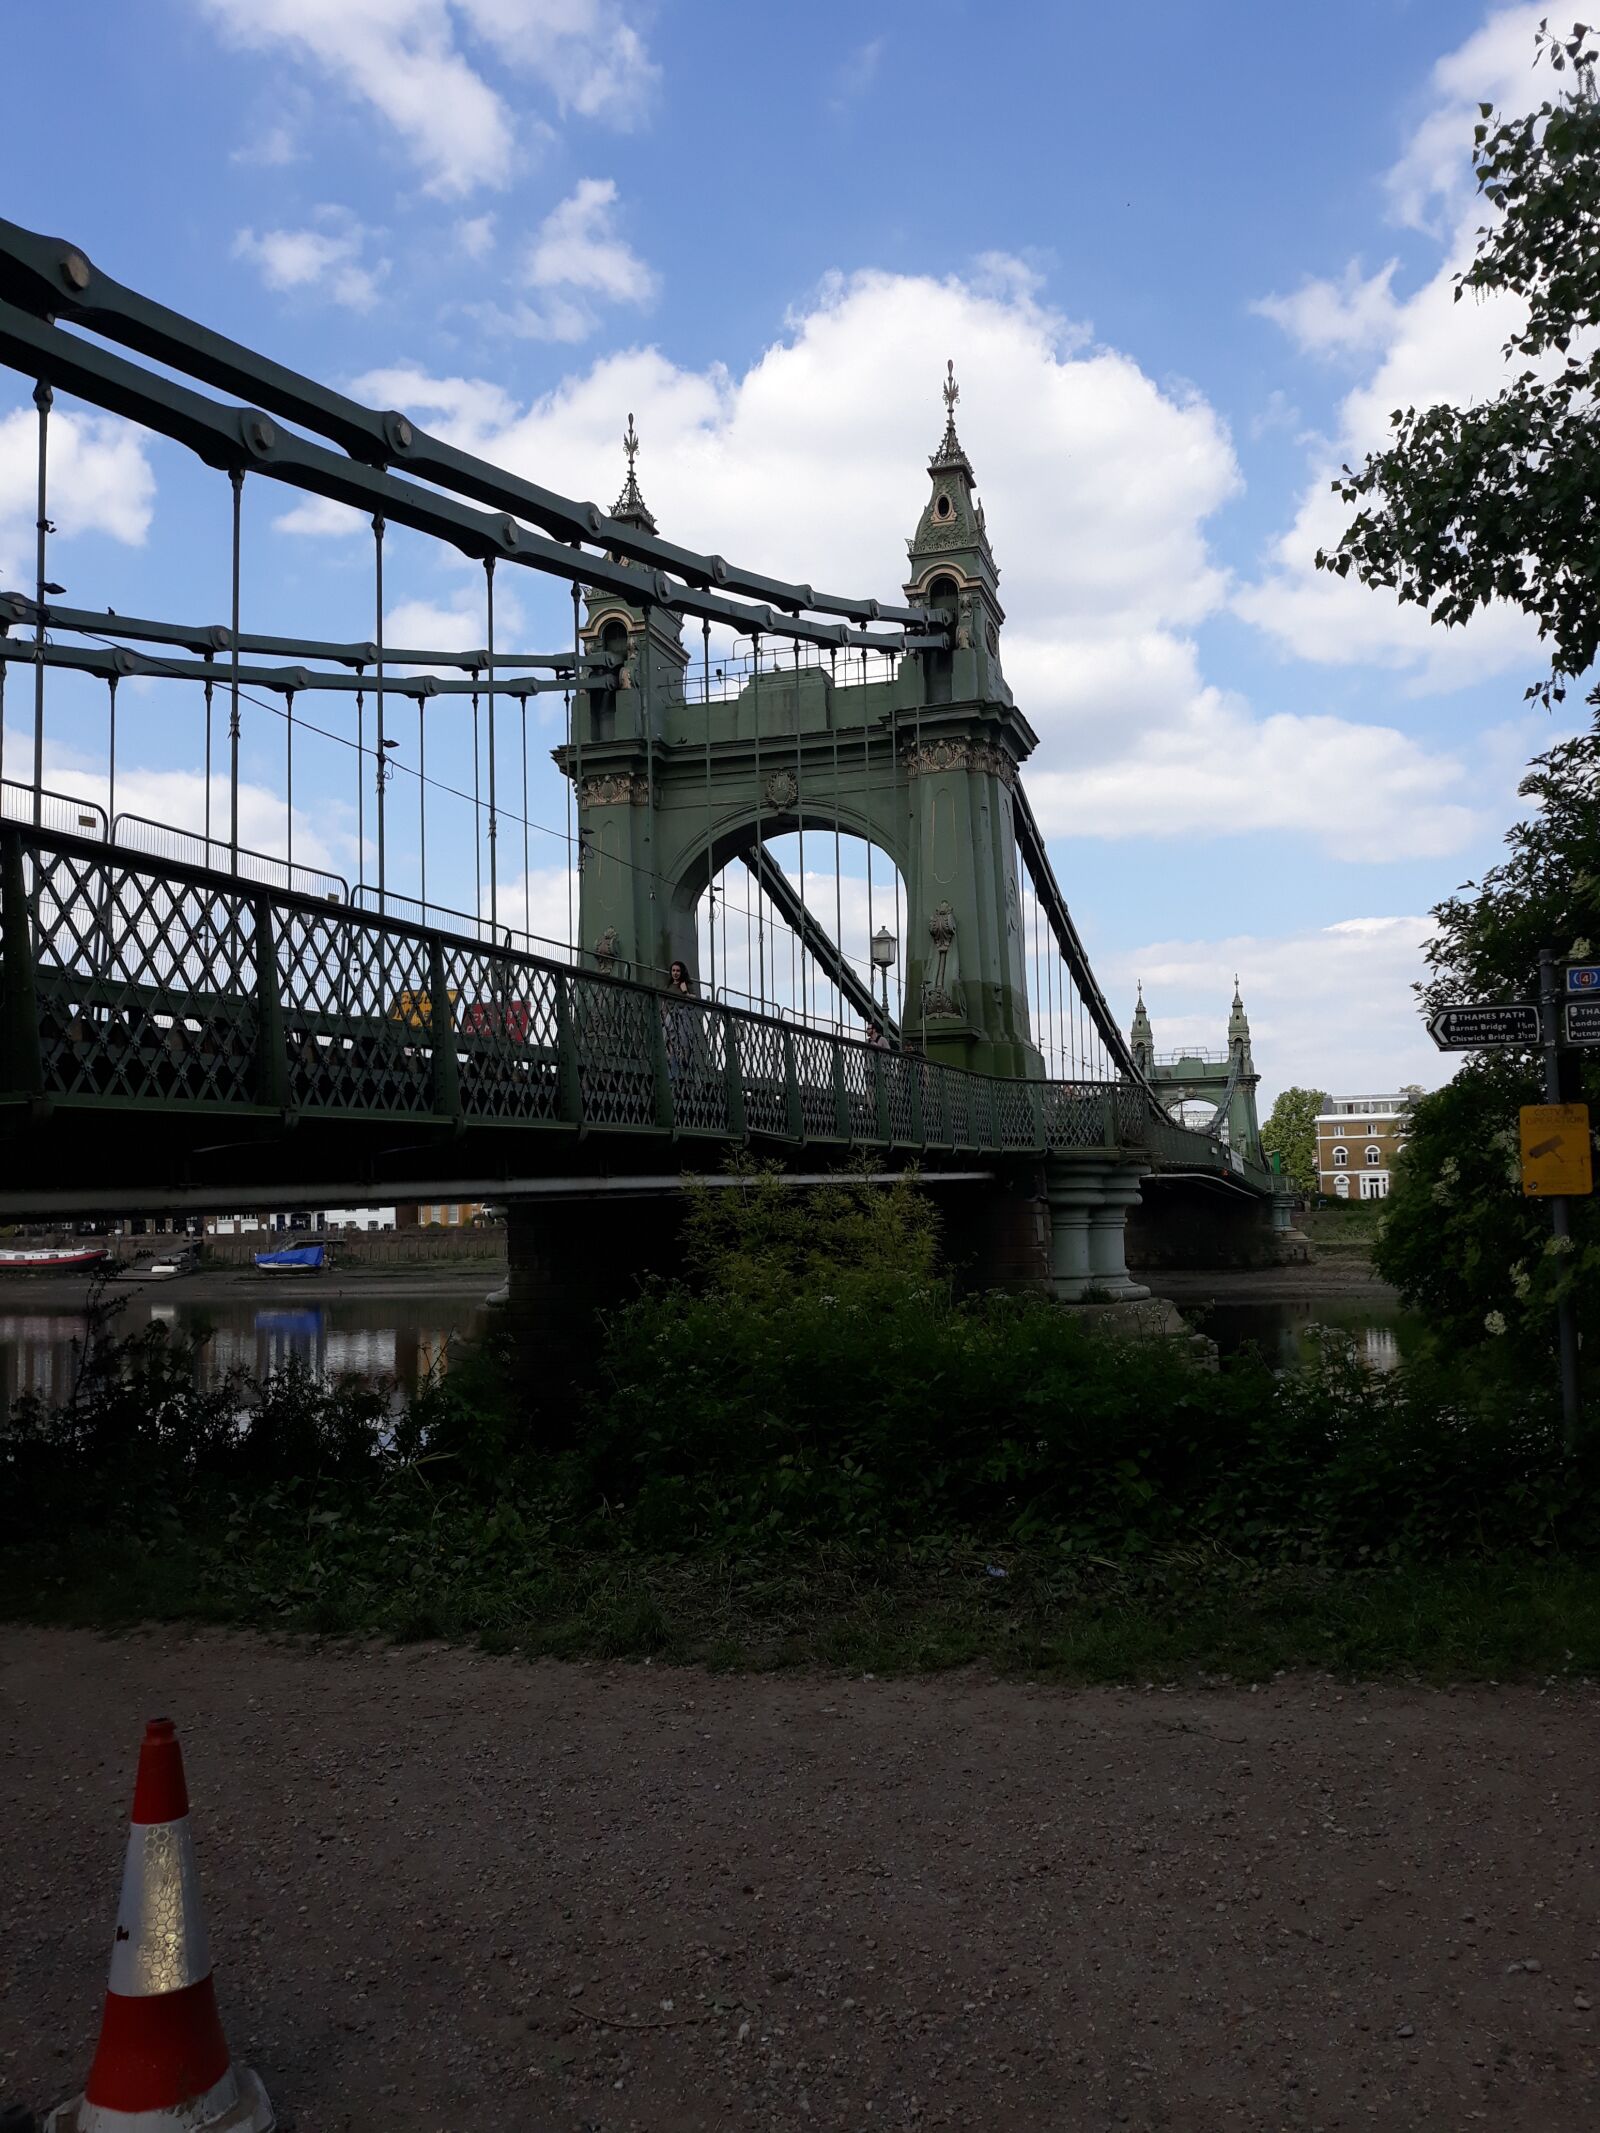 Samsung Galaxy J5 sample photo. Bridge, hammersmith, london photography